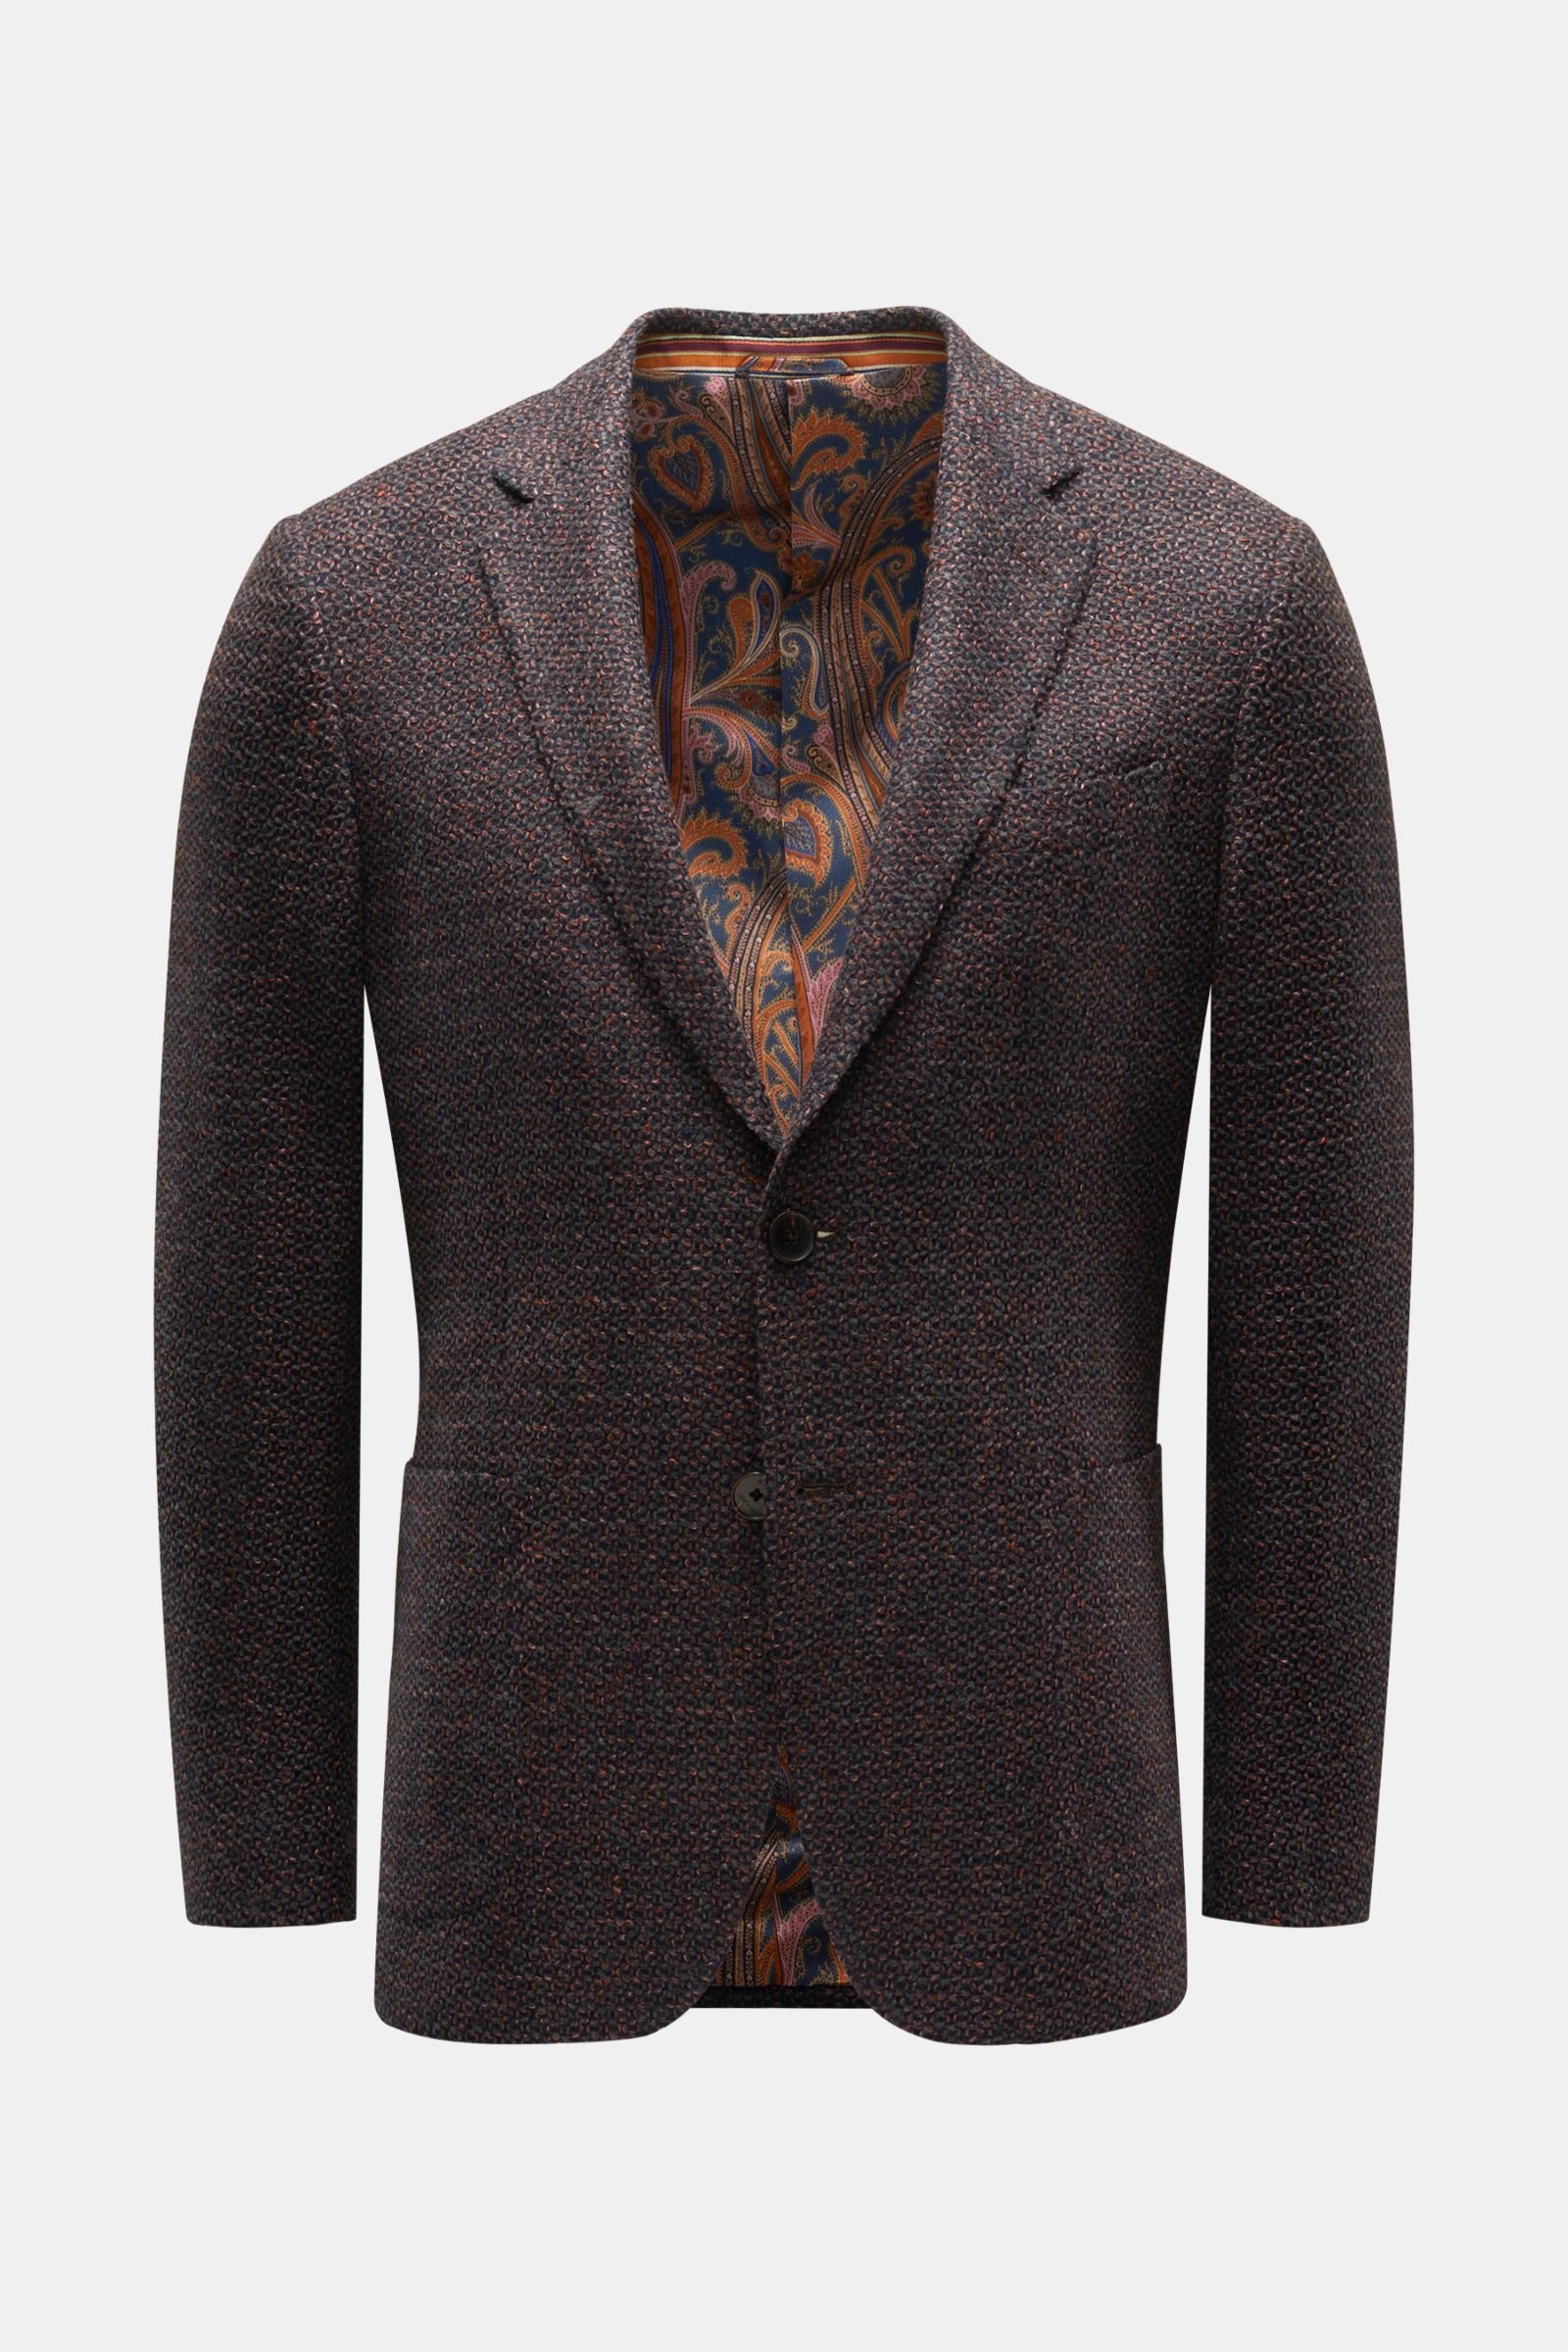 Smart-casual jacket dark grey/russet patterned